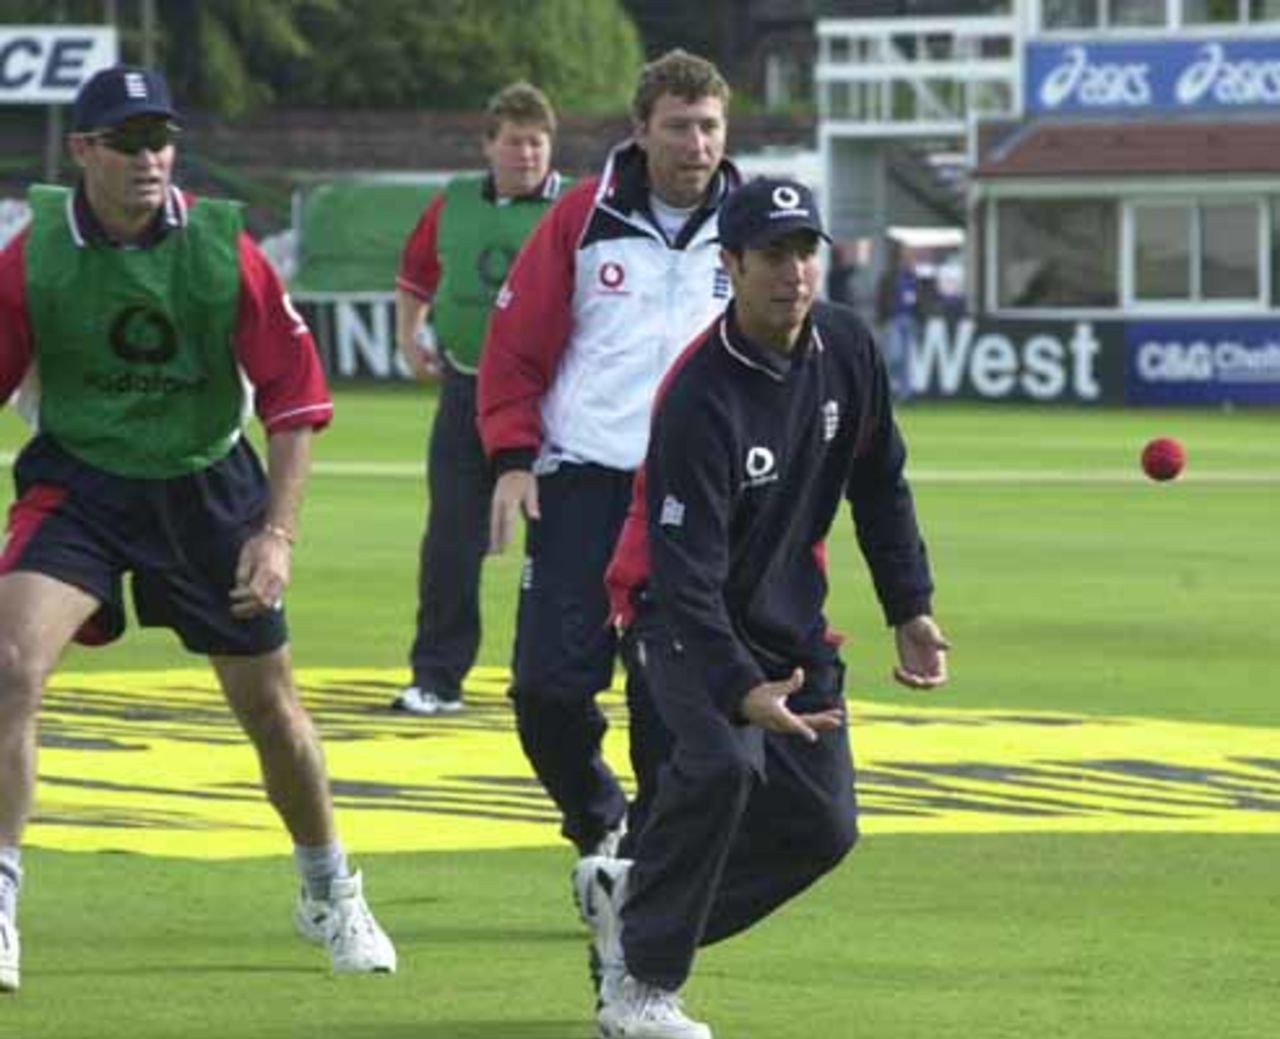 England v West Indies 3rd Test, Headingley 2000